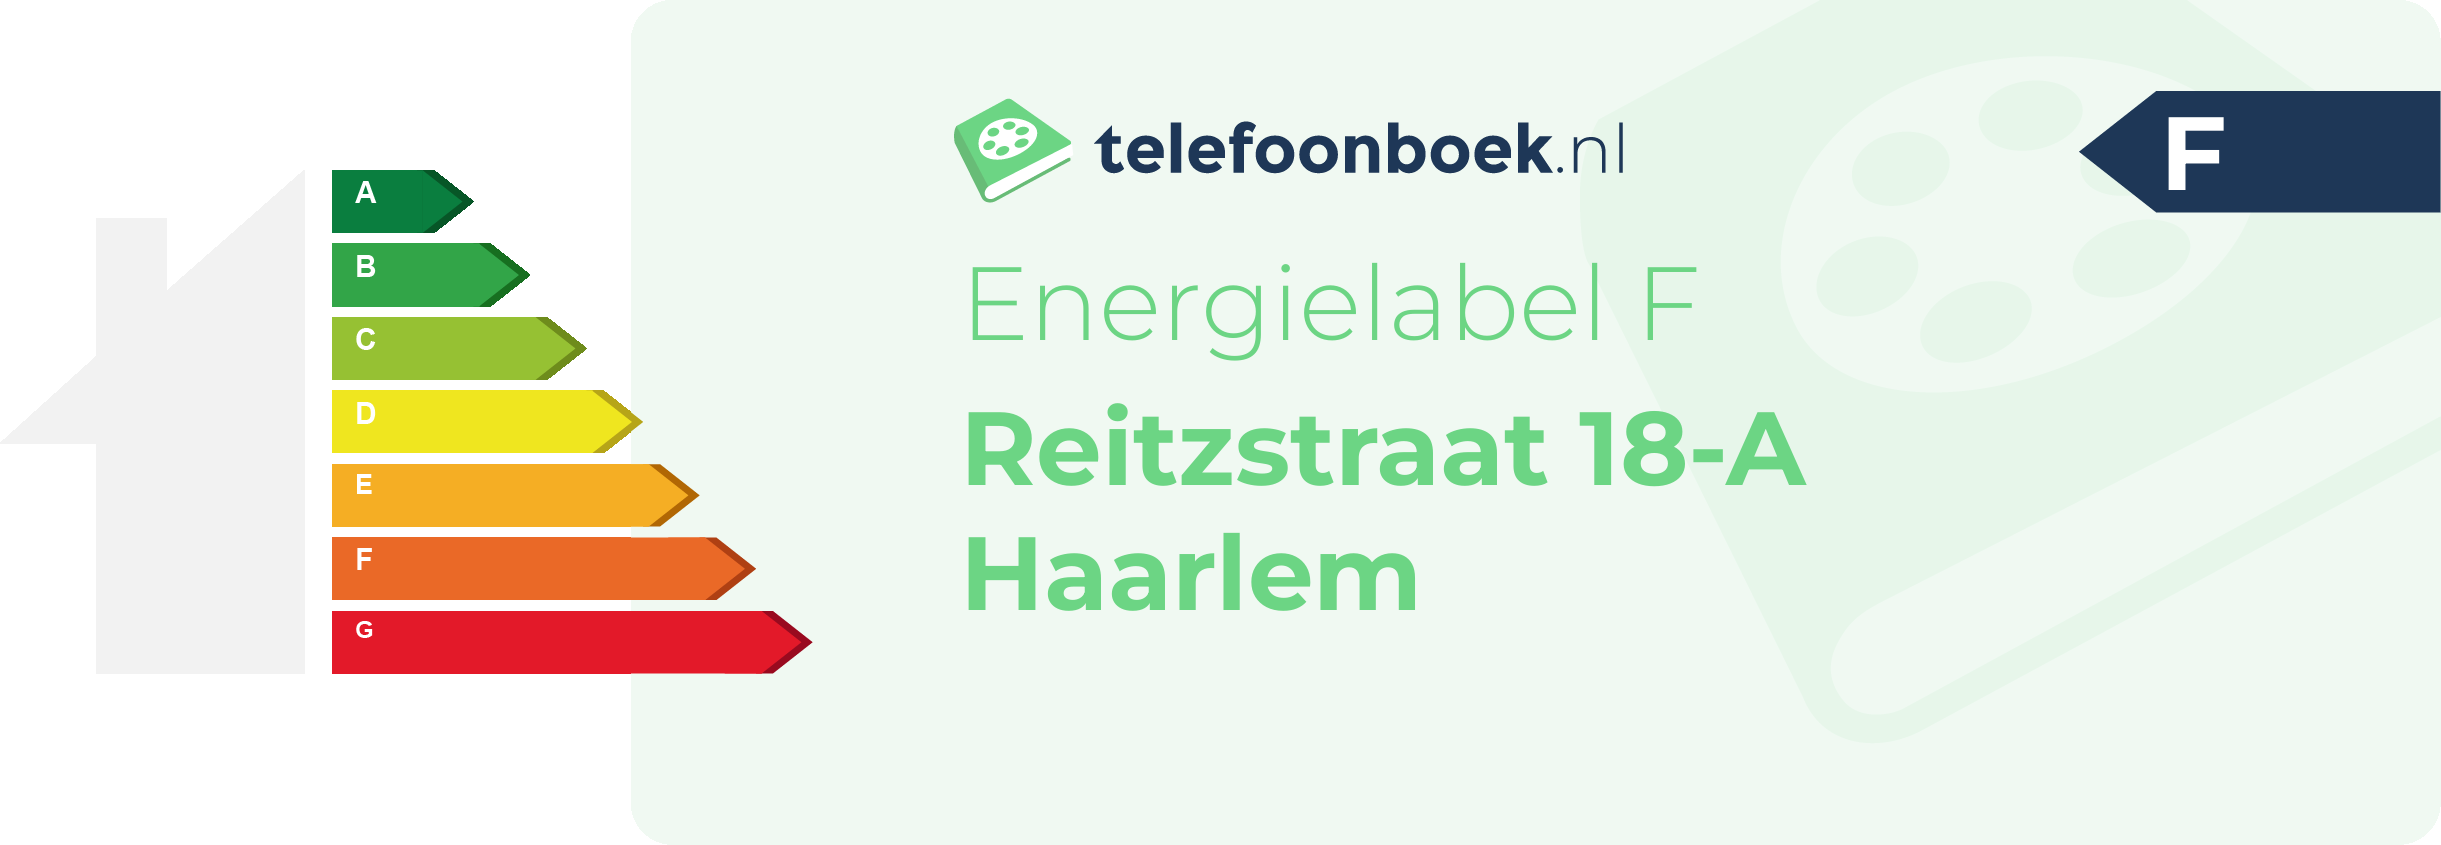 Energielabel Reitzstraat 18-A Haarlem